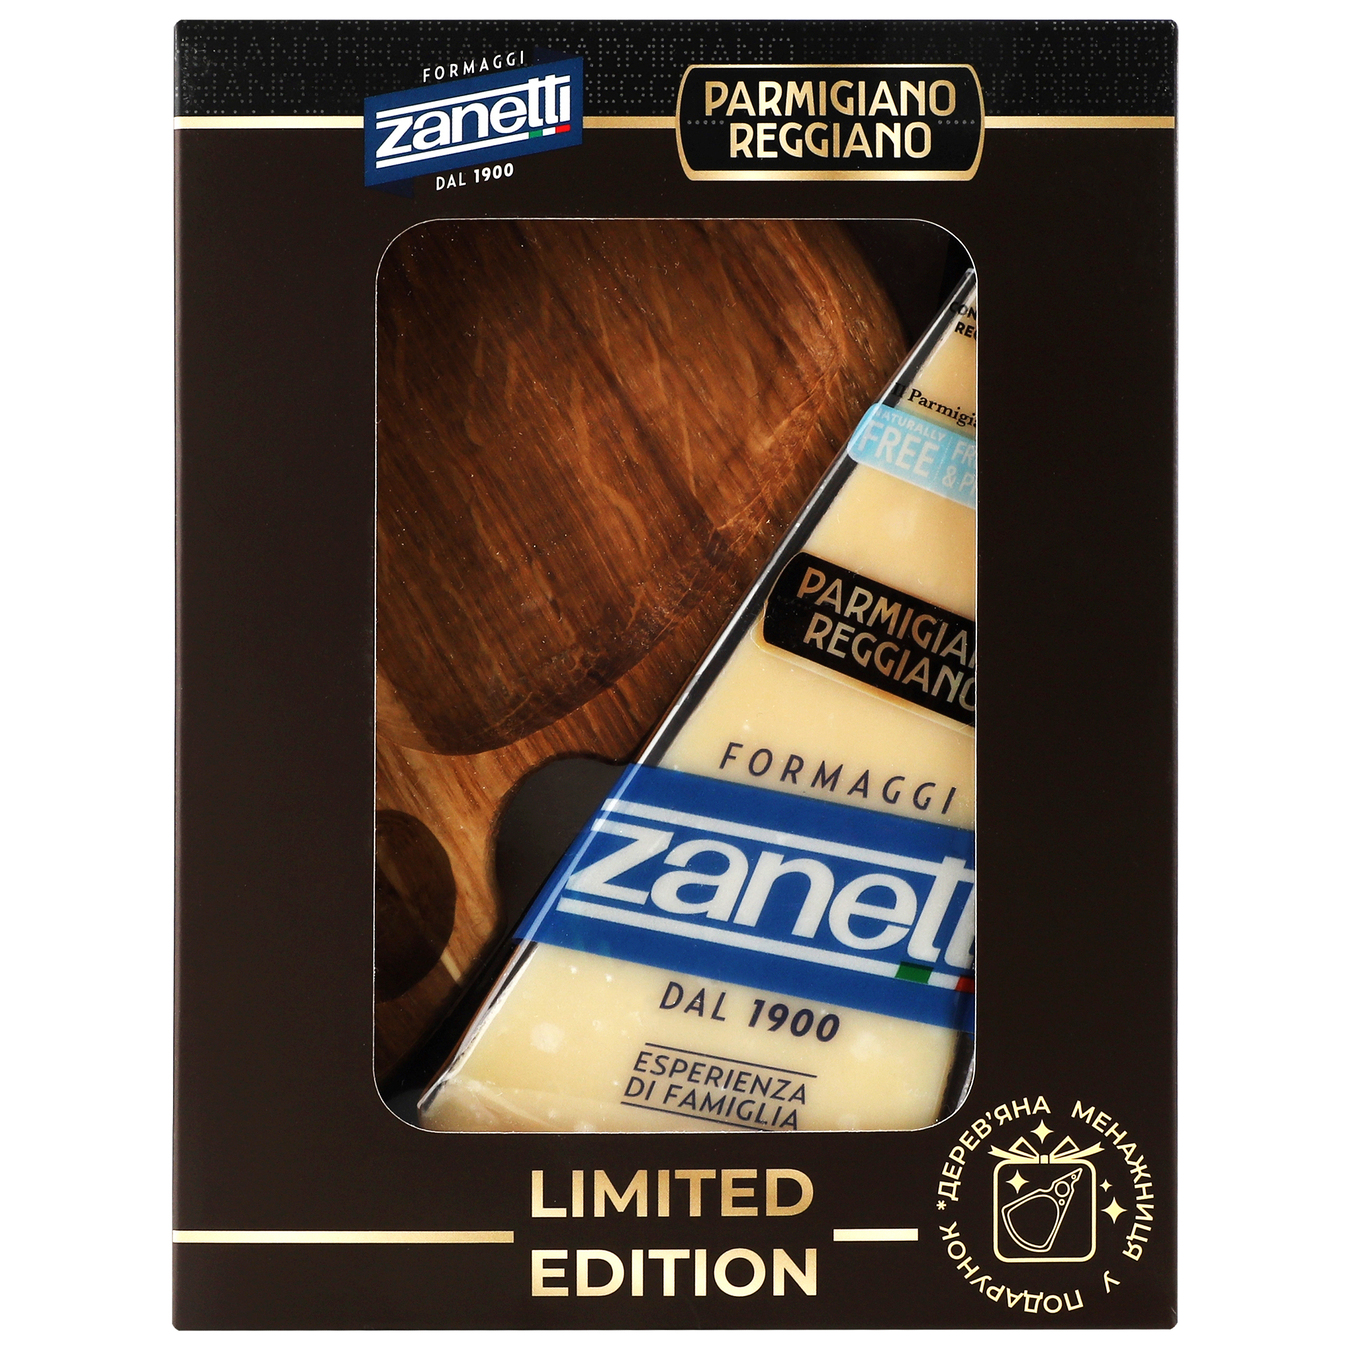 Zanetti hard cheese Parmigiano Reggiano Dop 32% 200g